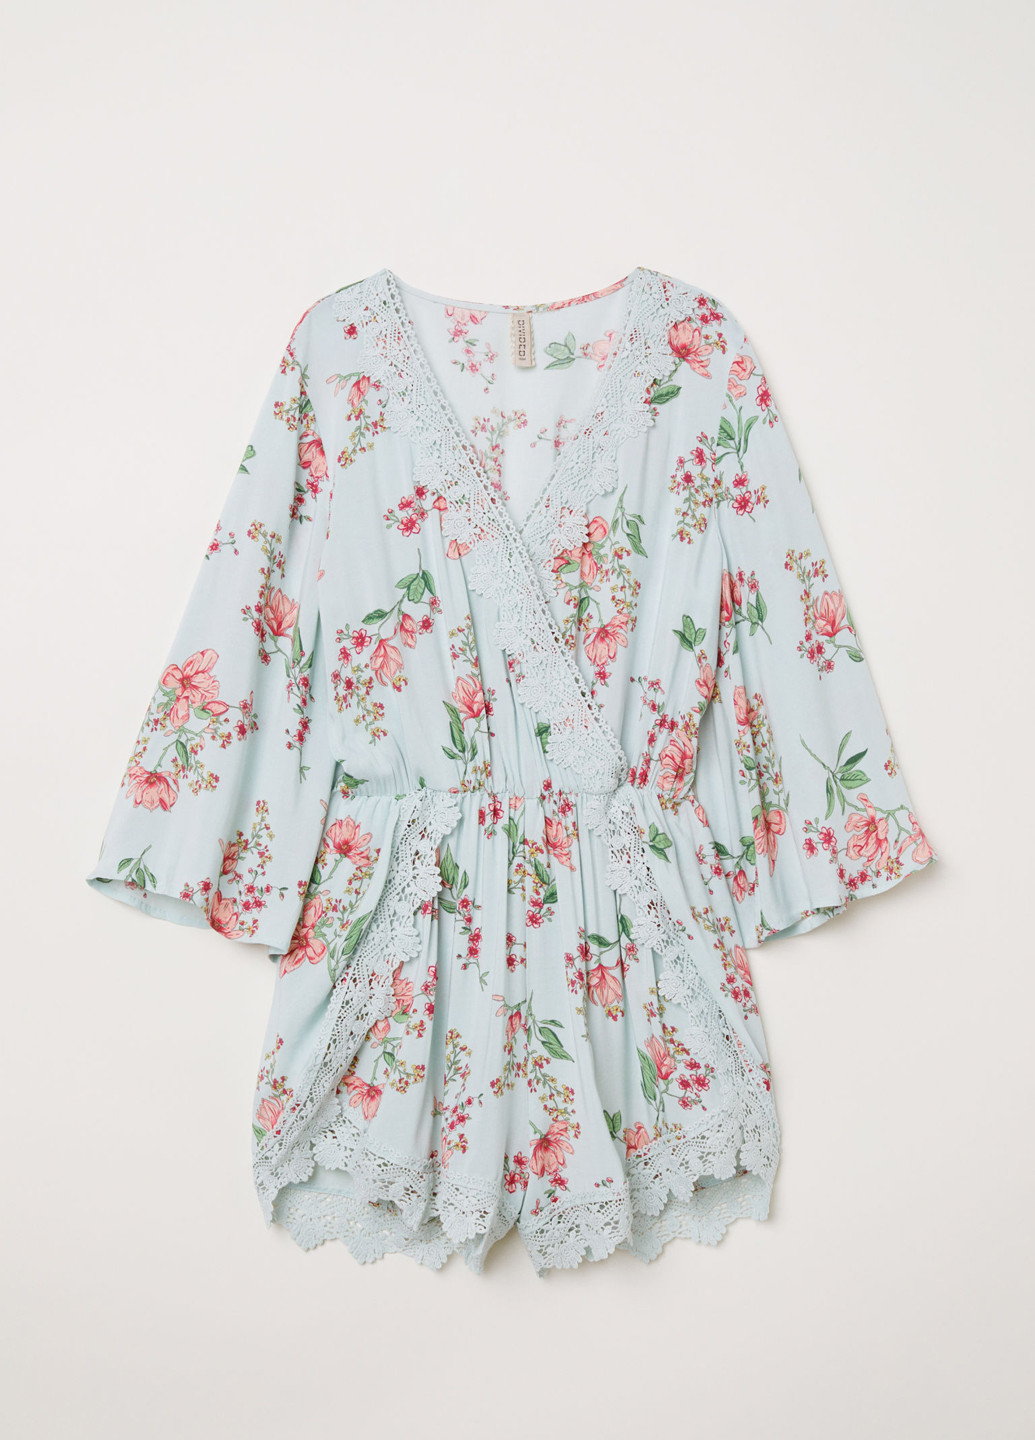 Комбинезон H&M комбинезон-шорты цветочный бирюзовый кэжуал